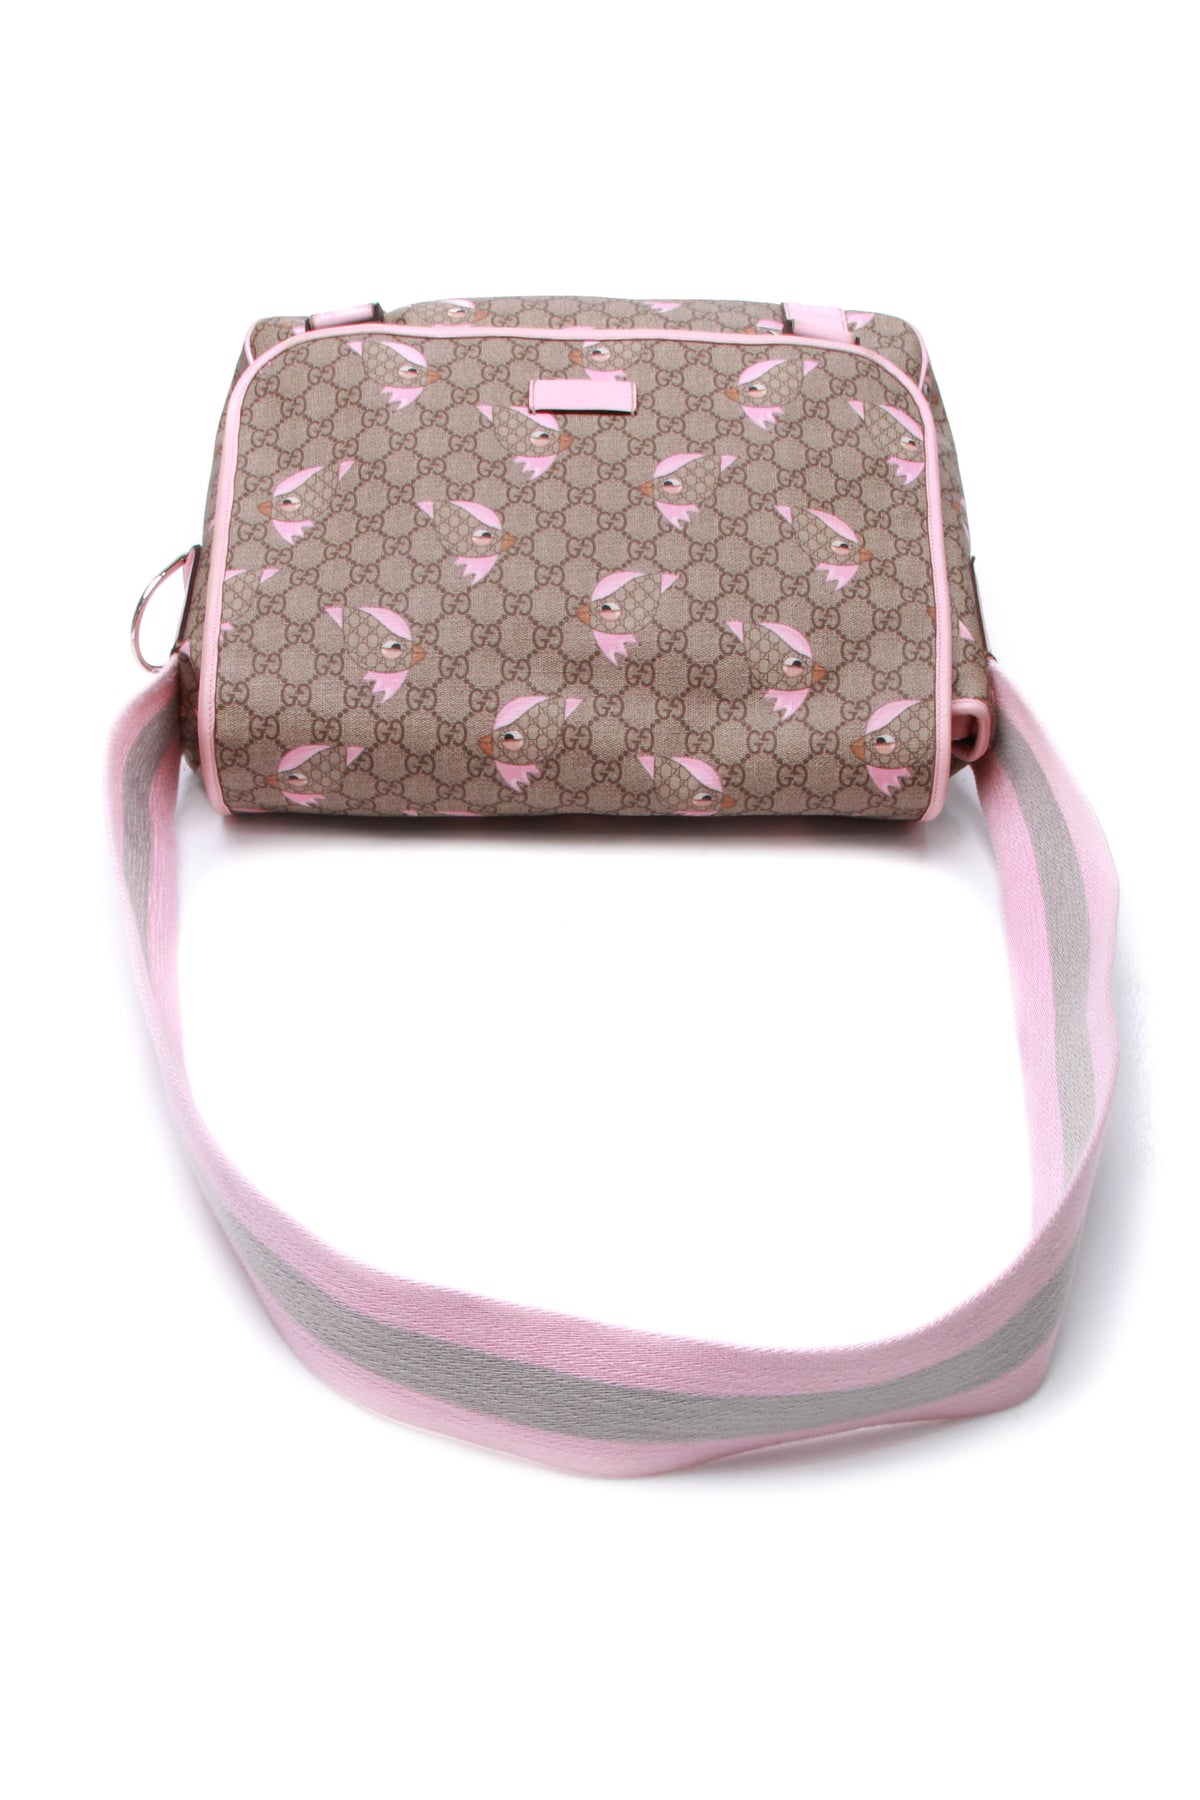 Gucci Diaper Bag  Luxury Love Consignment